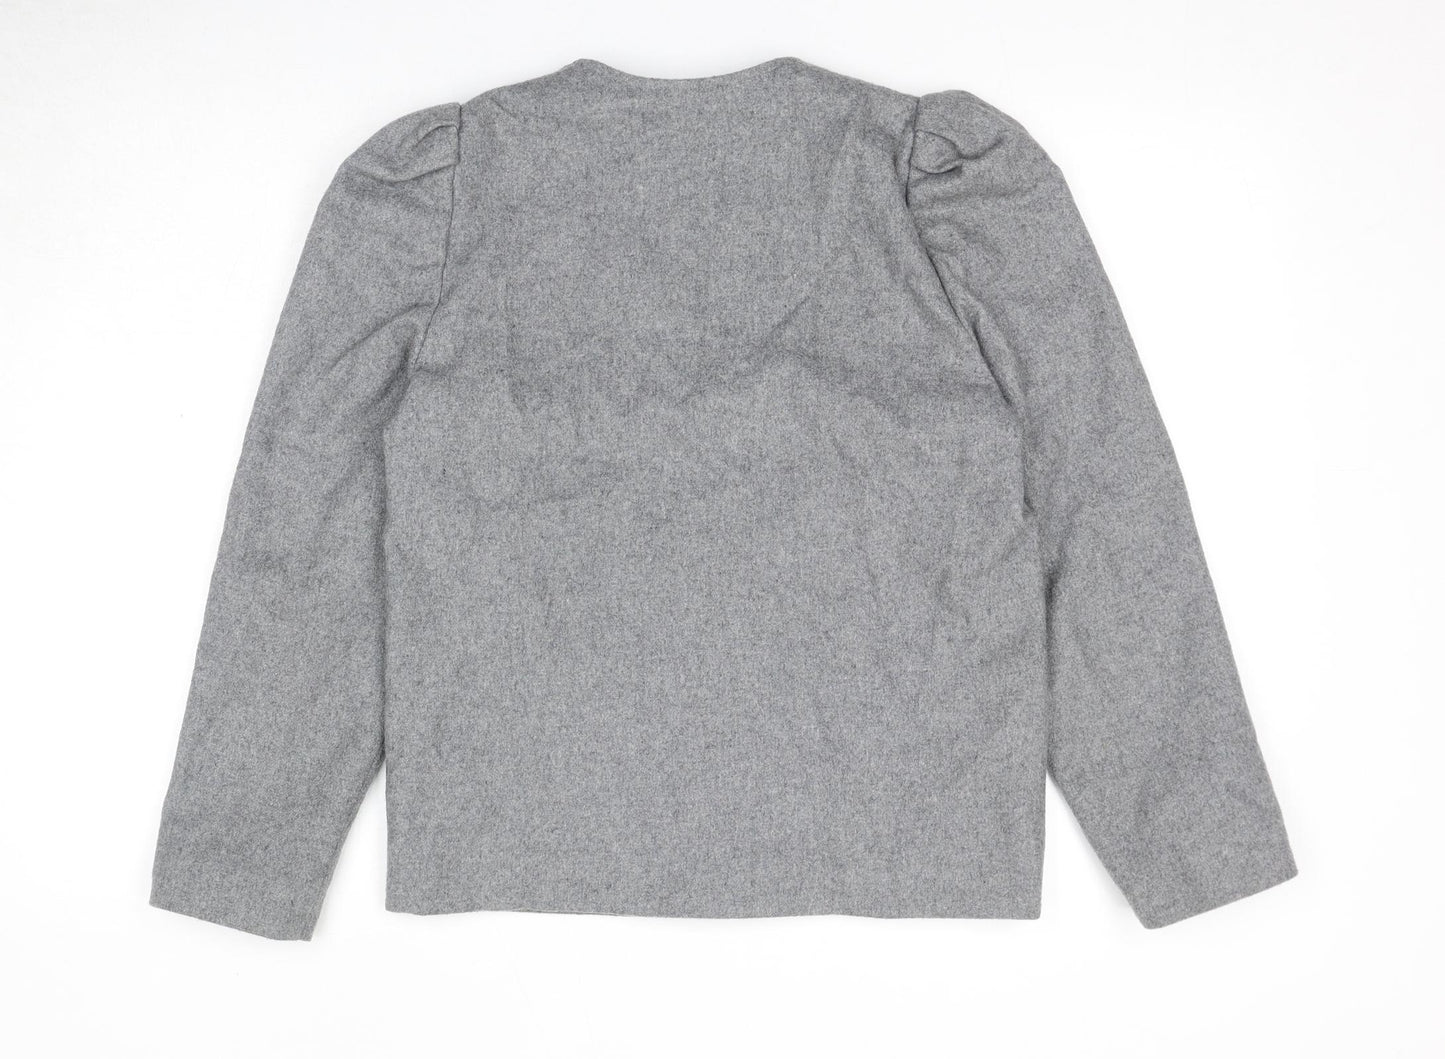 Topshop Womens Grey Jacket Size 10